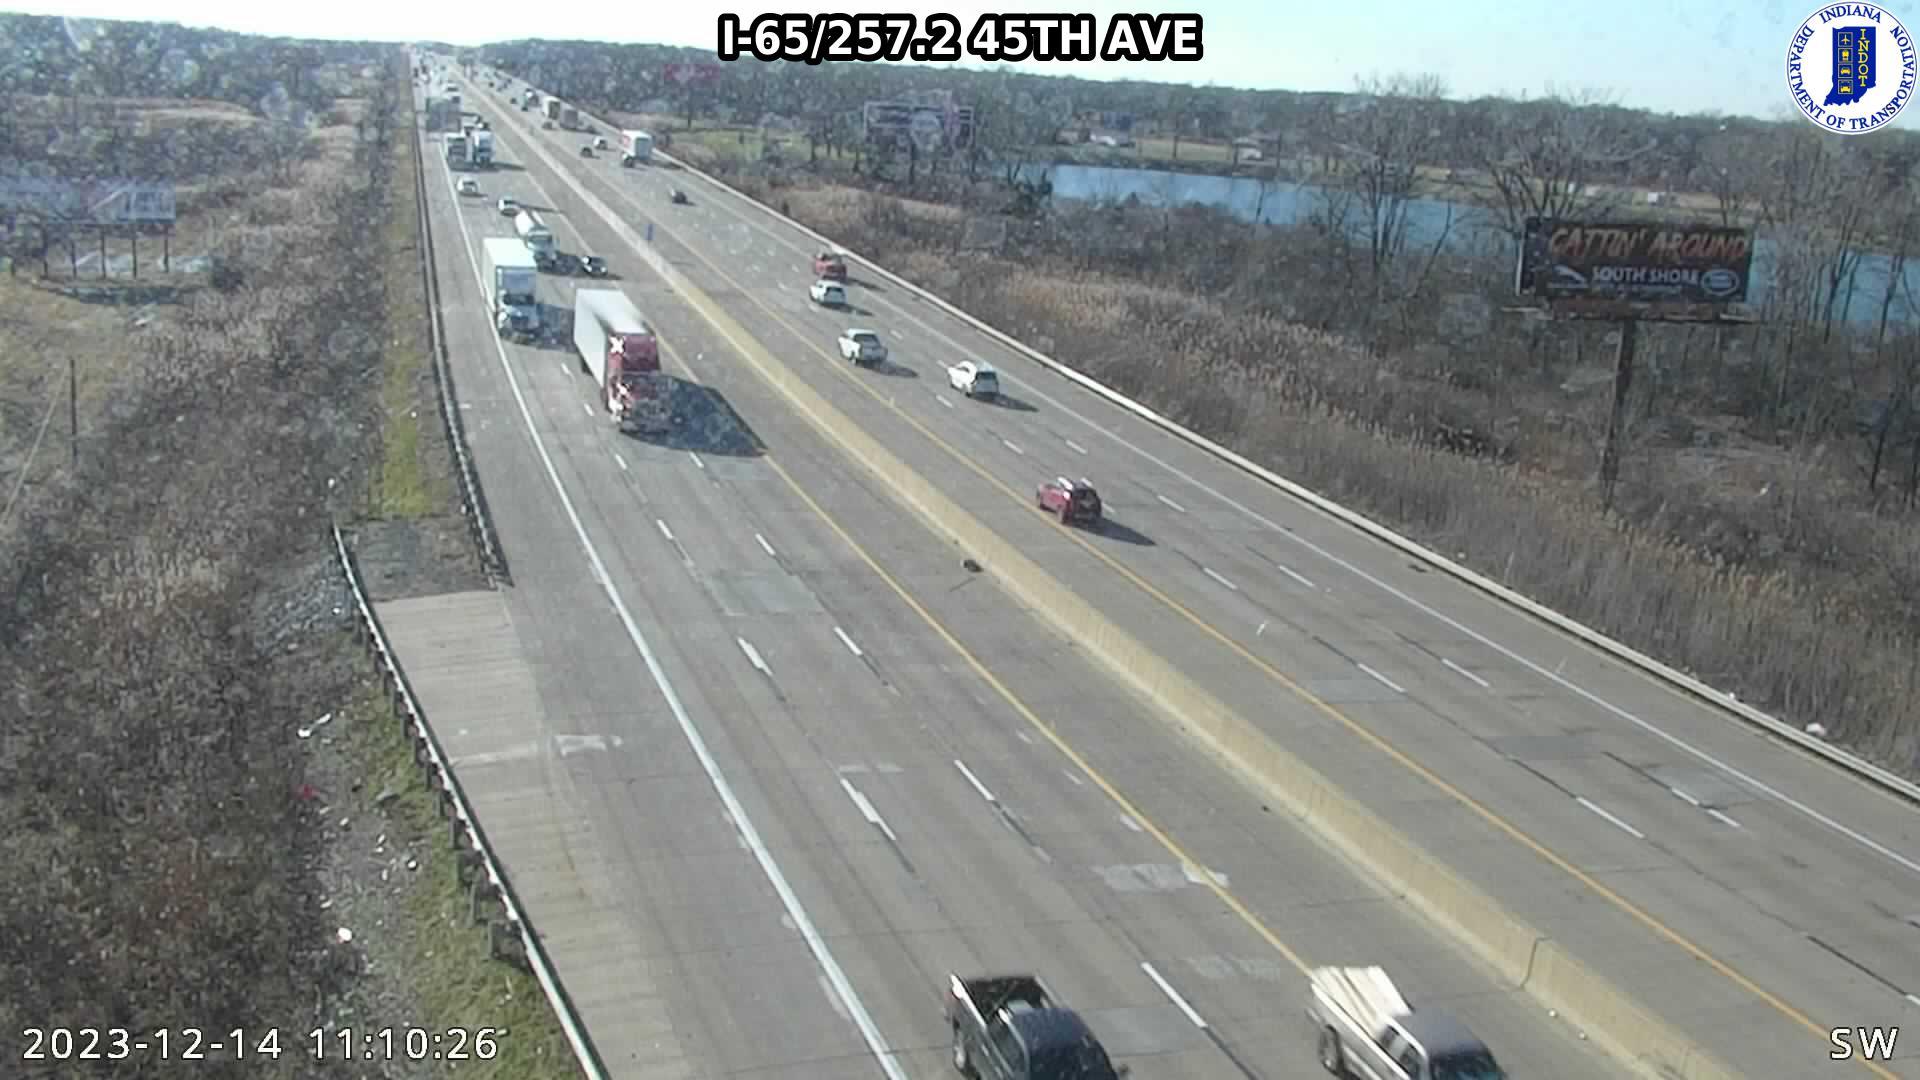 Traffic Cam Hobart: I-65: I-65/257.2 45TH AVE Player